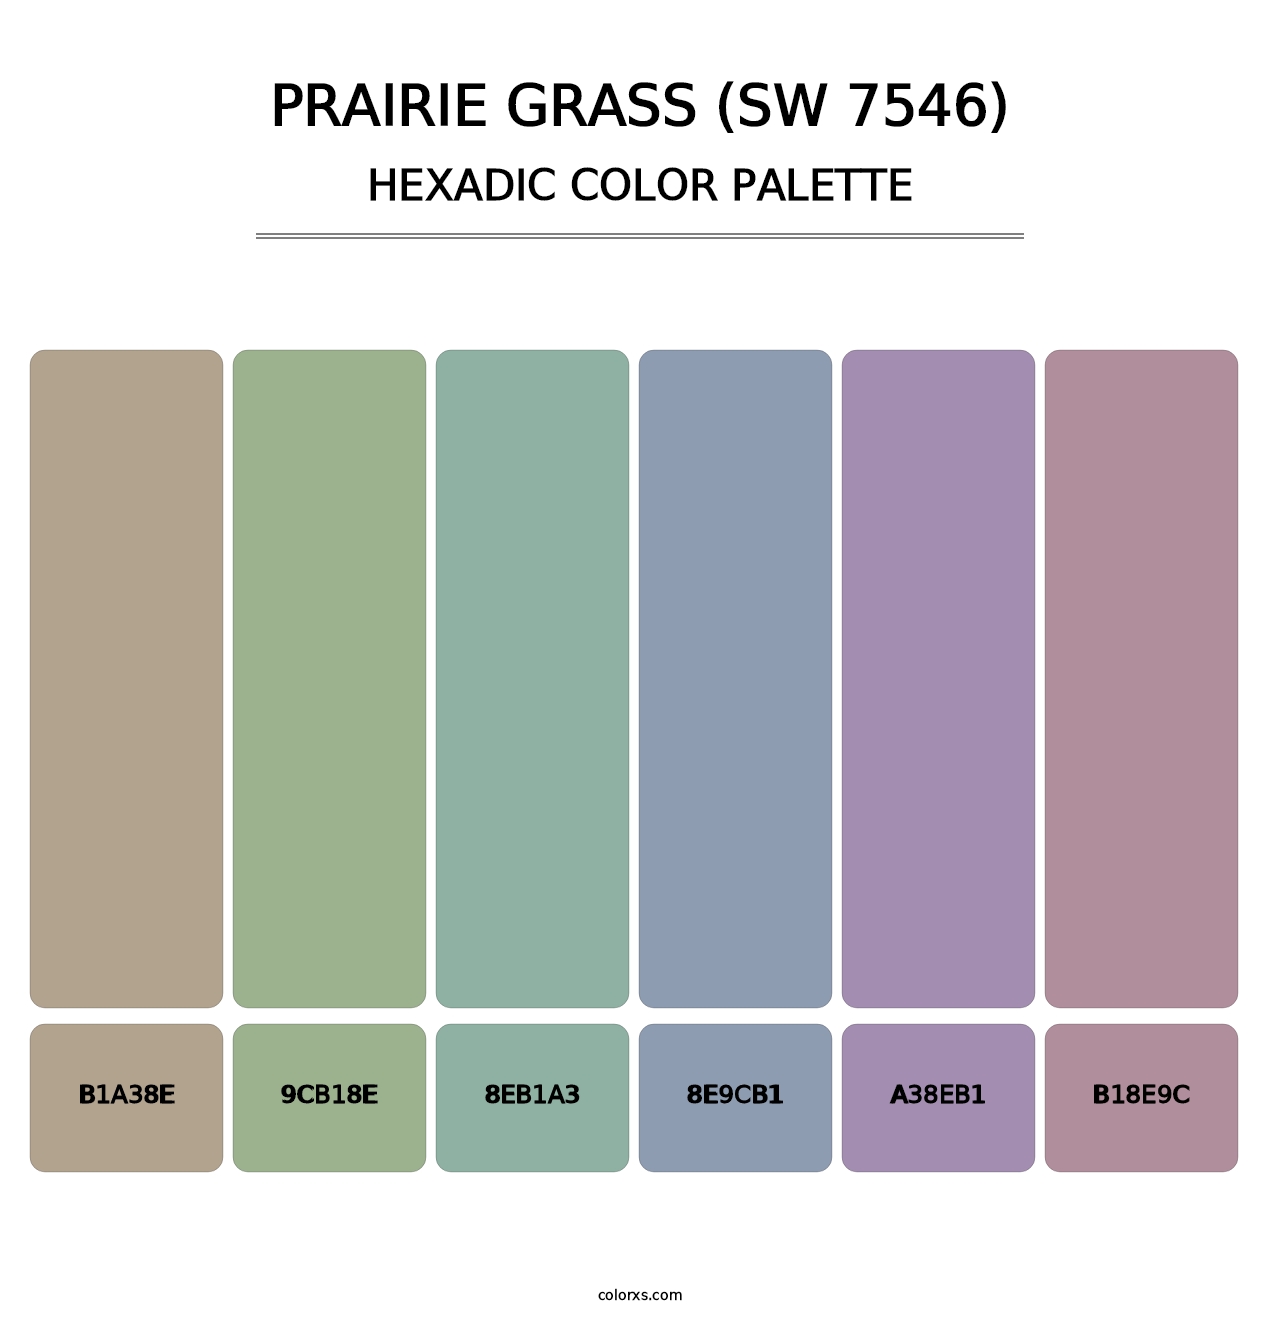 Prairie Grass (SW 7546) - Hexadic Color Palette